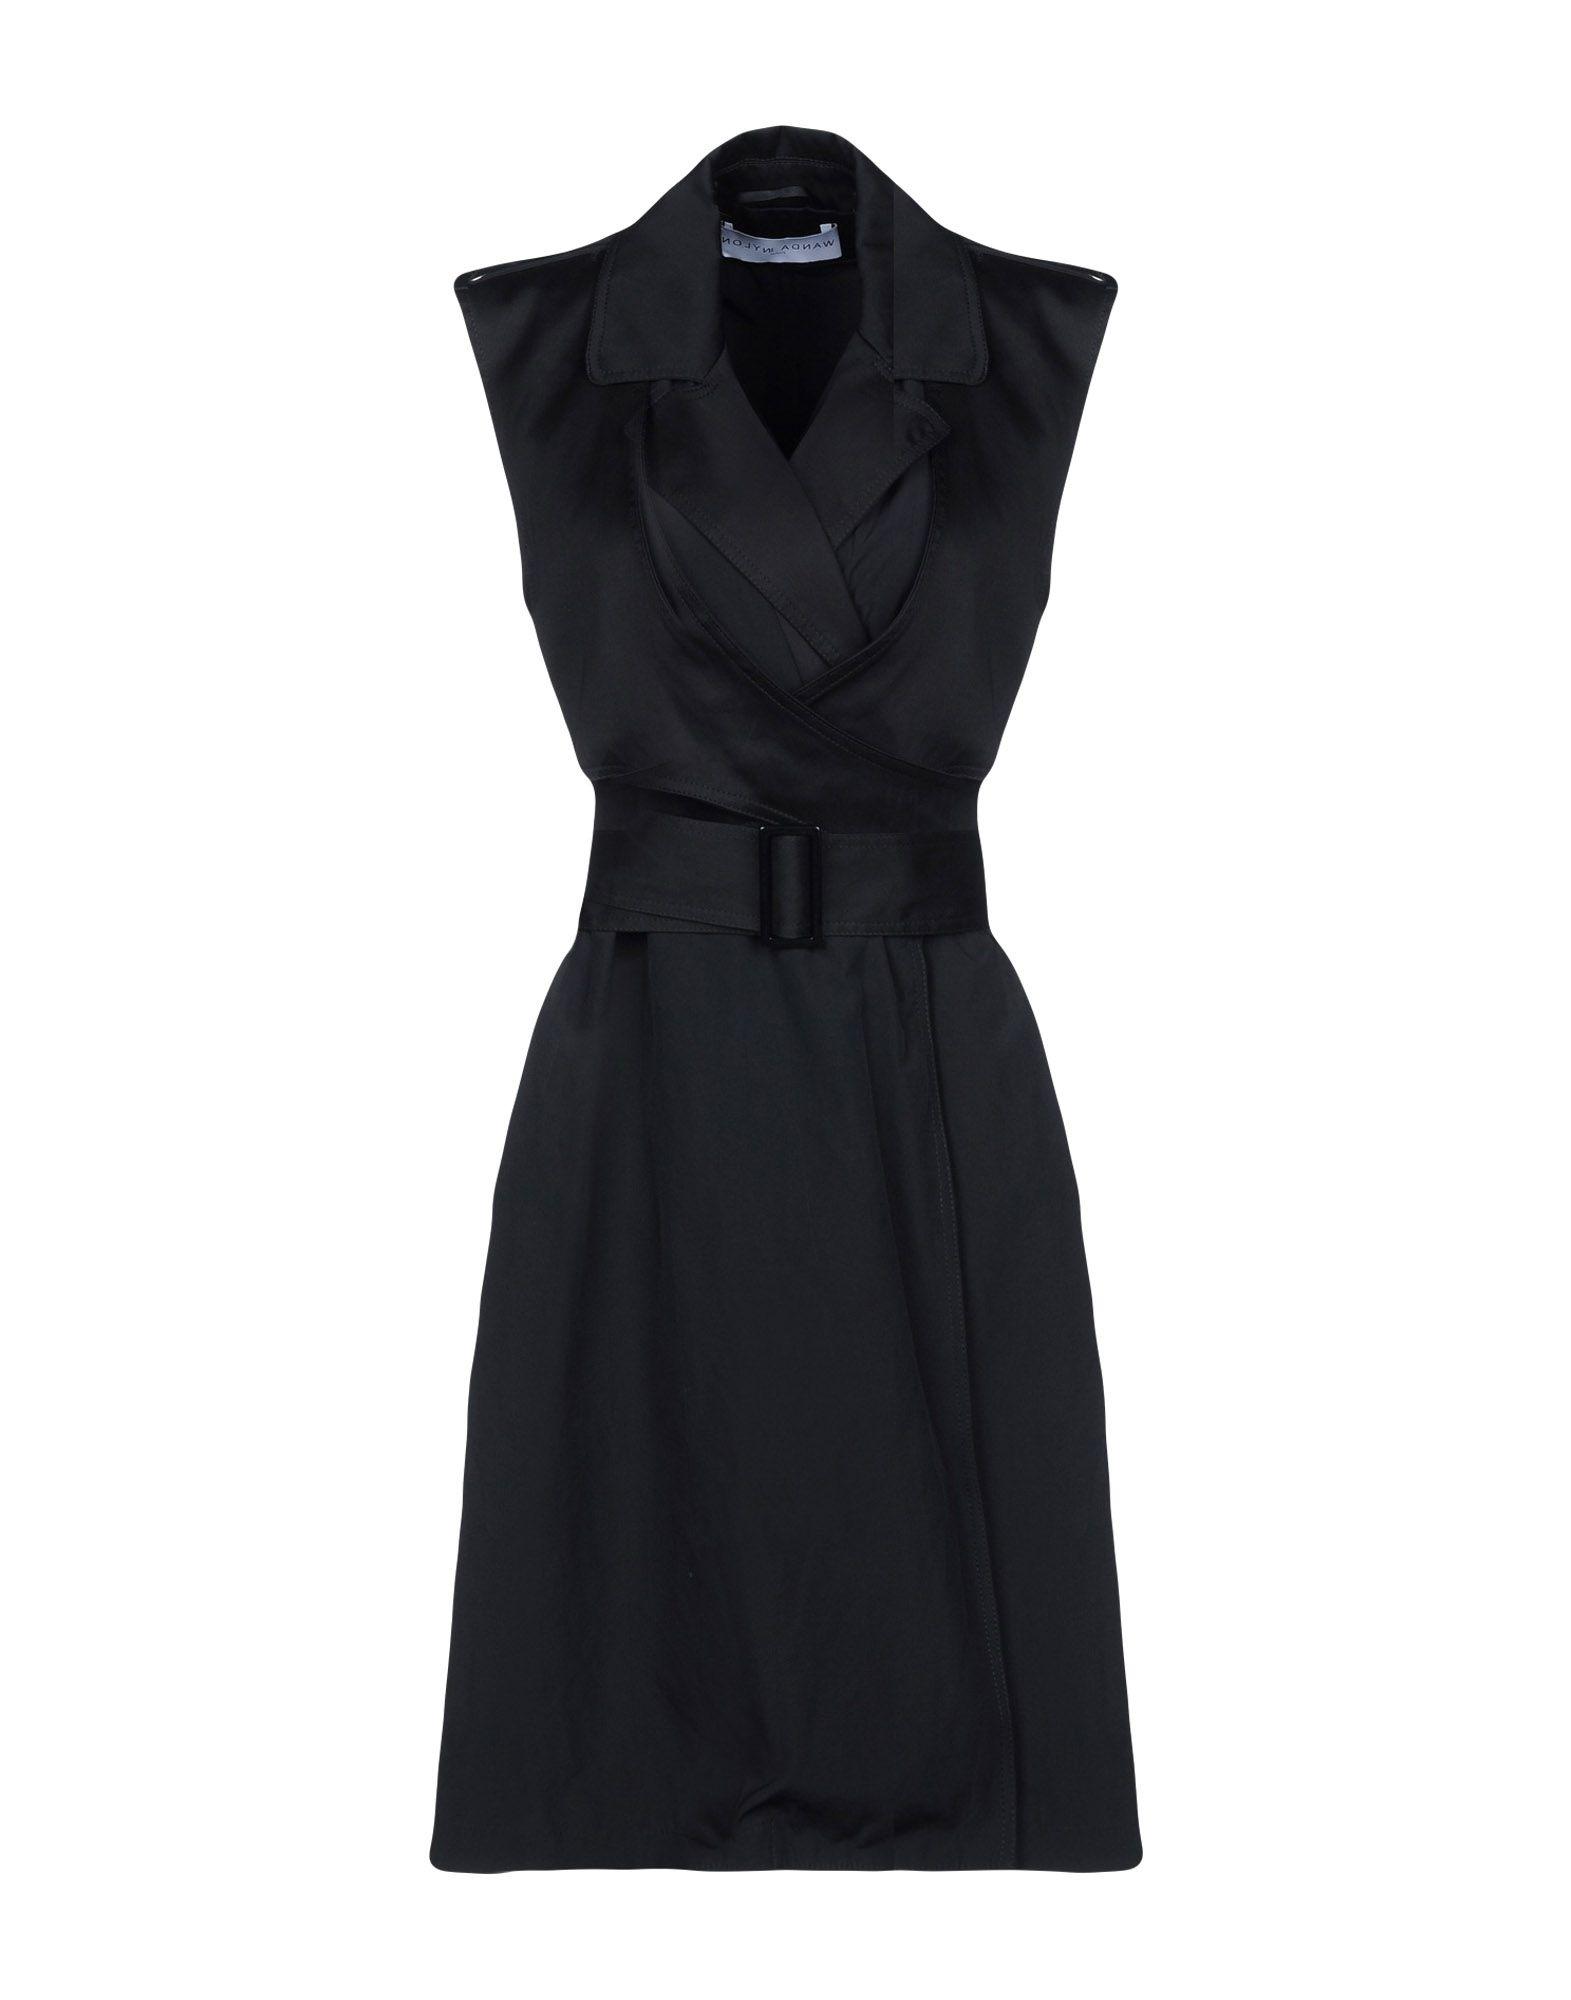 Wanda Nylon In Black | ModeSens